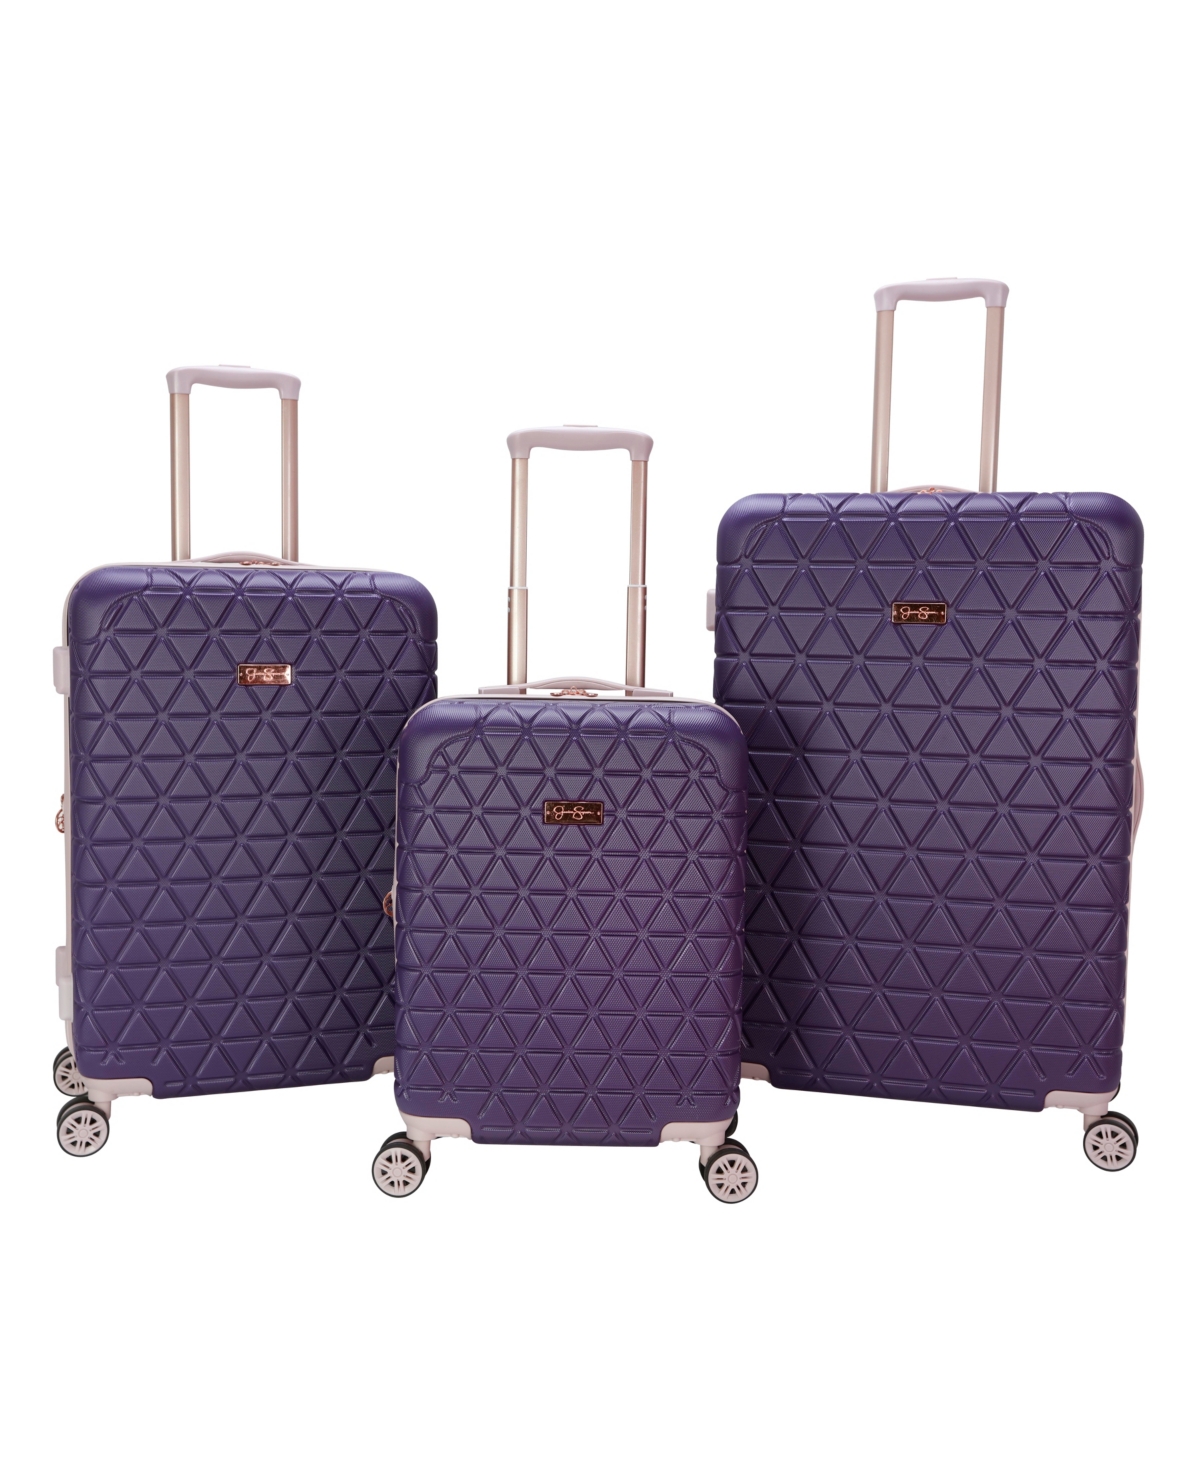 Jessica Simpson Dreamer 3 Piece Hardside Luggage Set In Grape